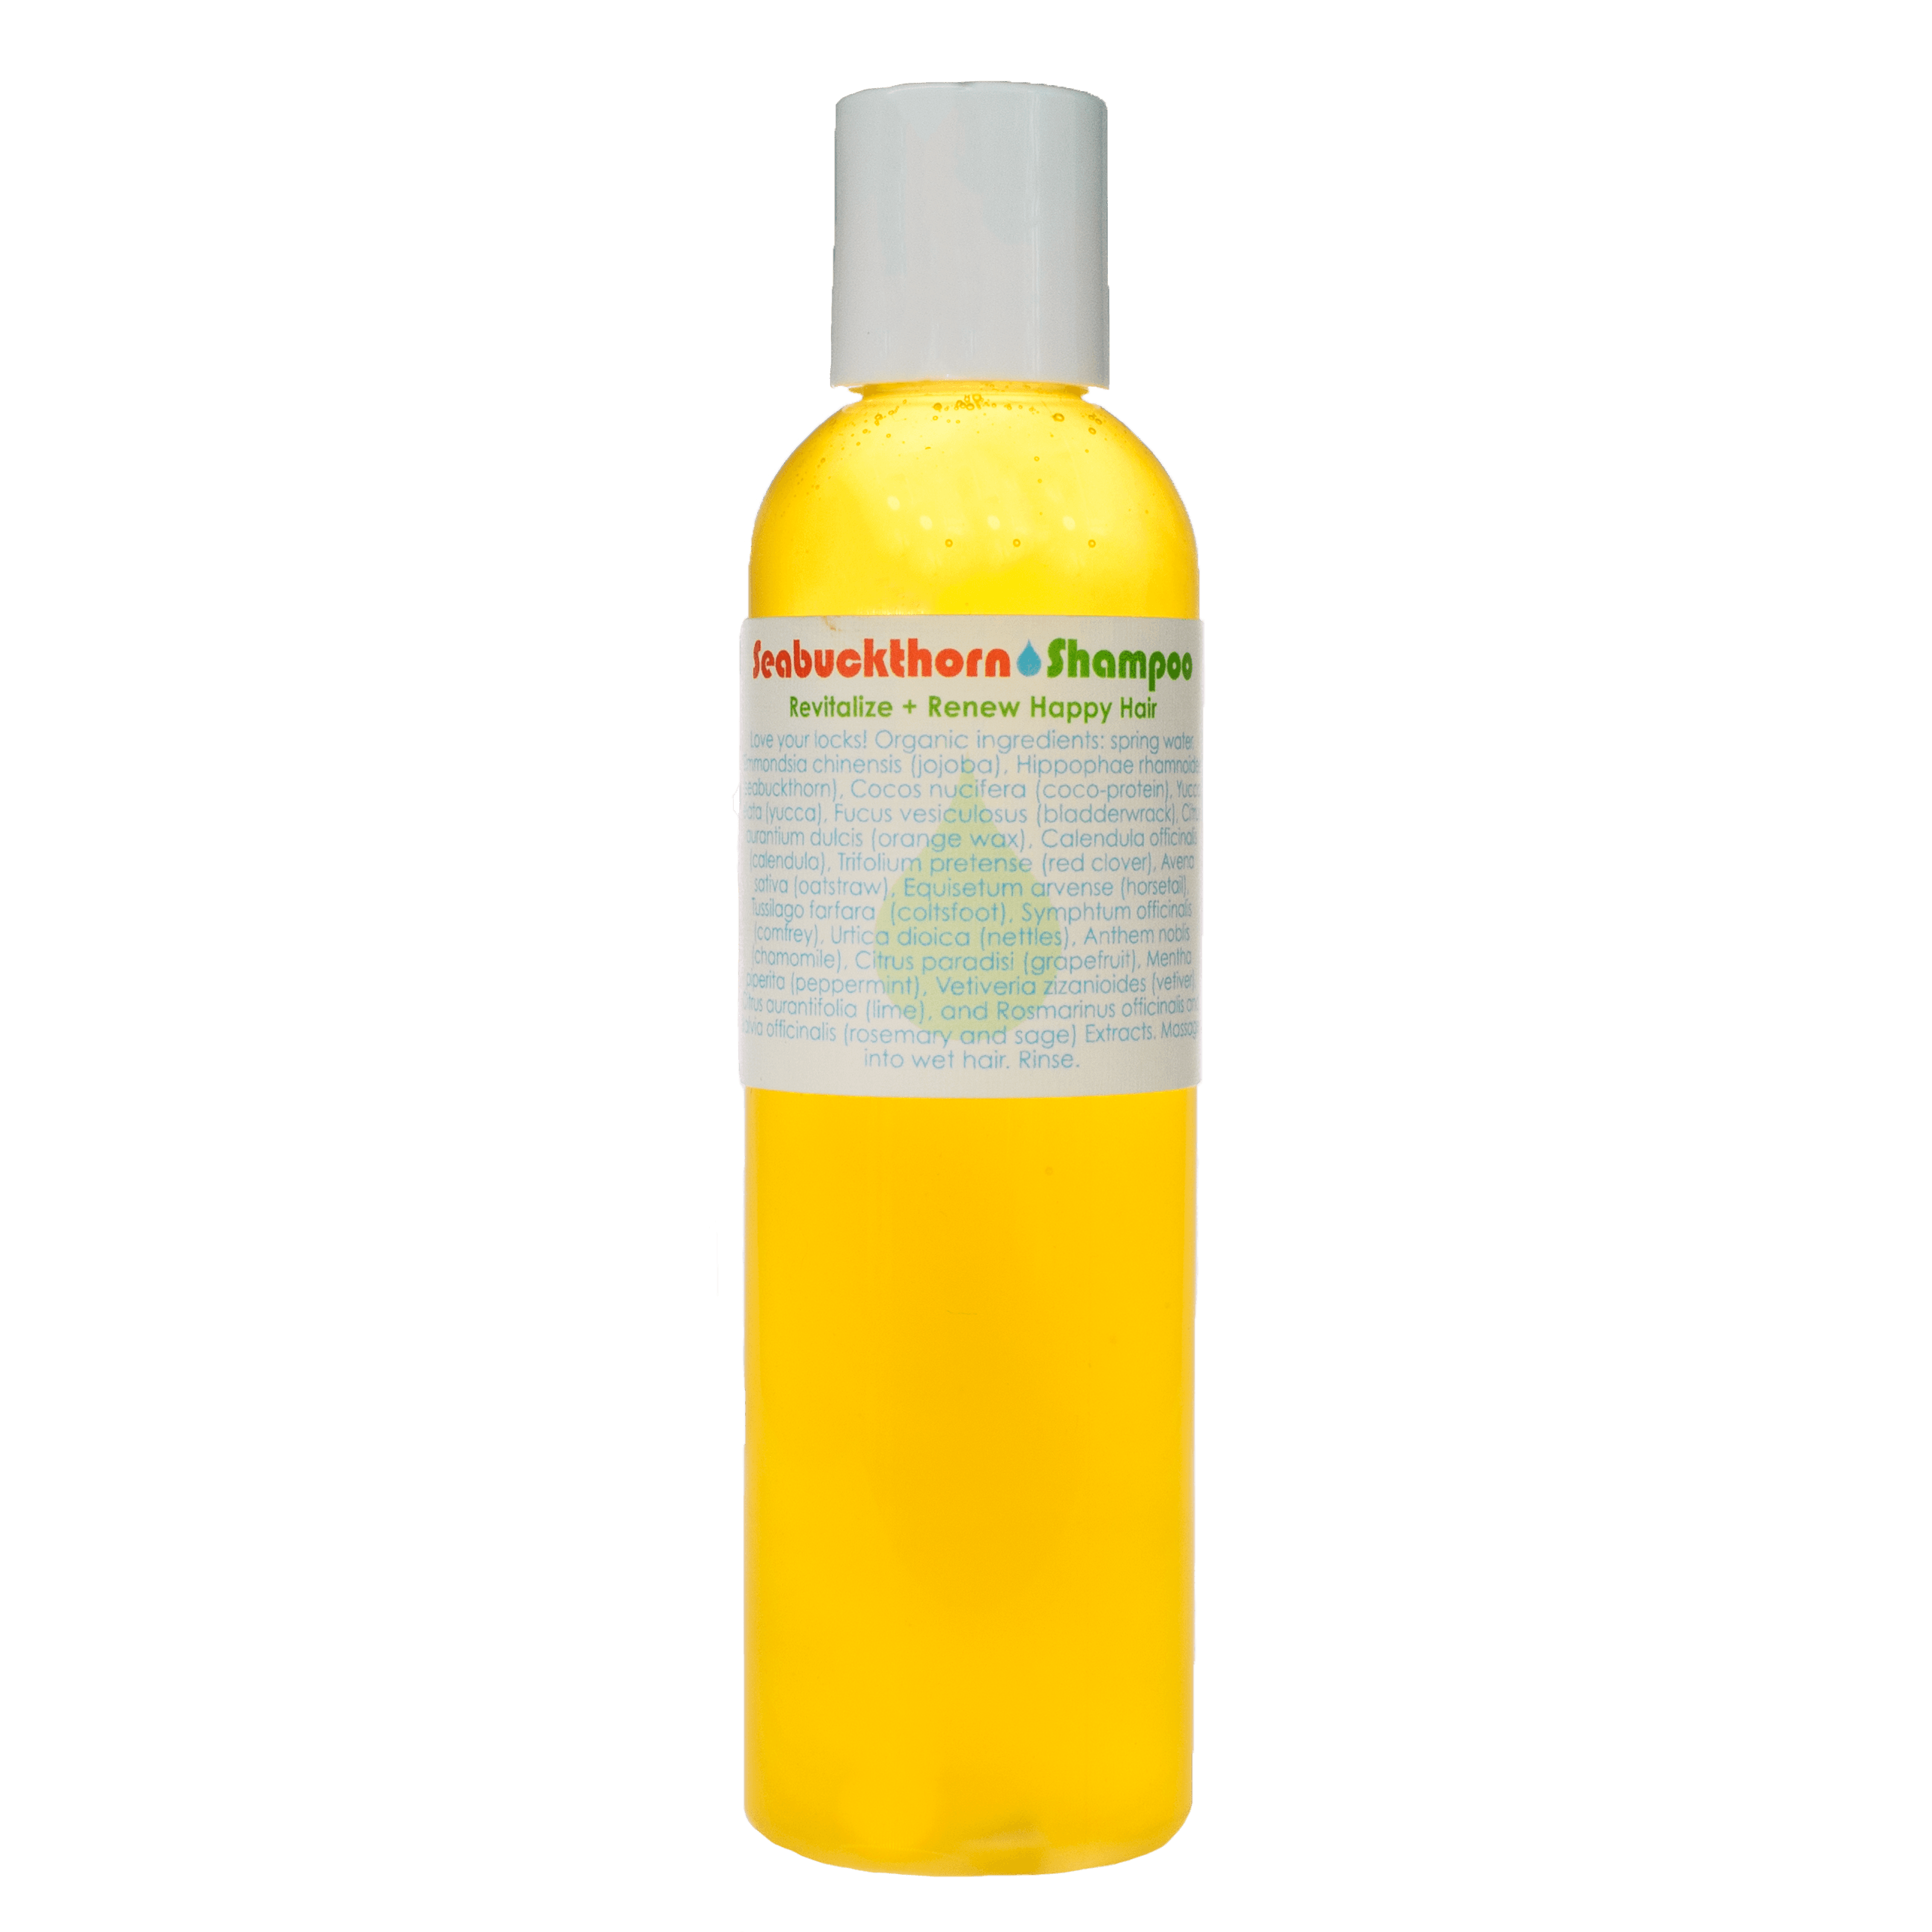 Living Libations - Seabuckthorn Shampoo - Glow Organic